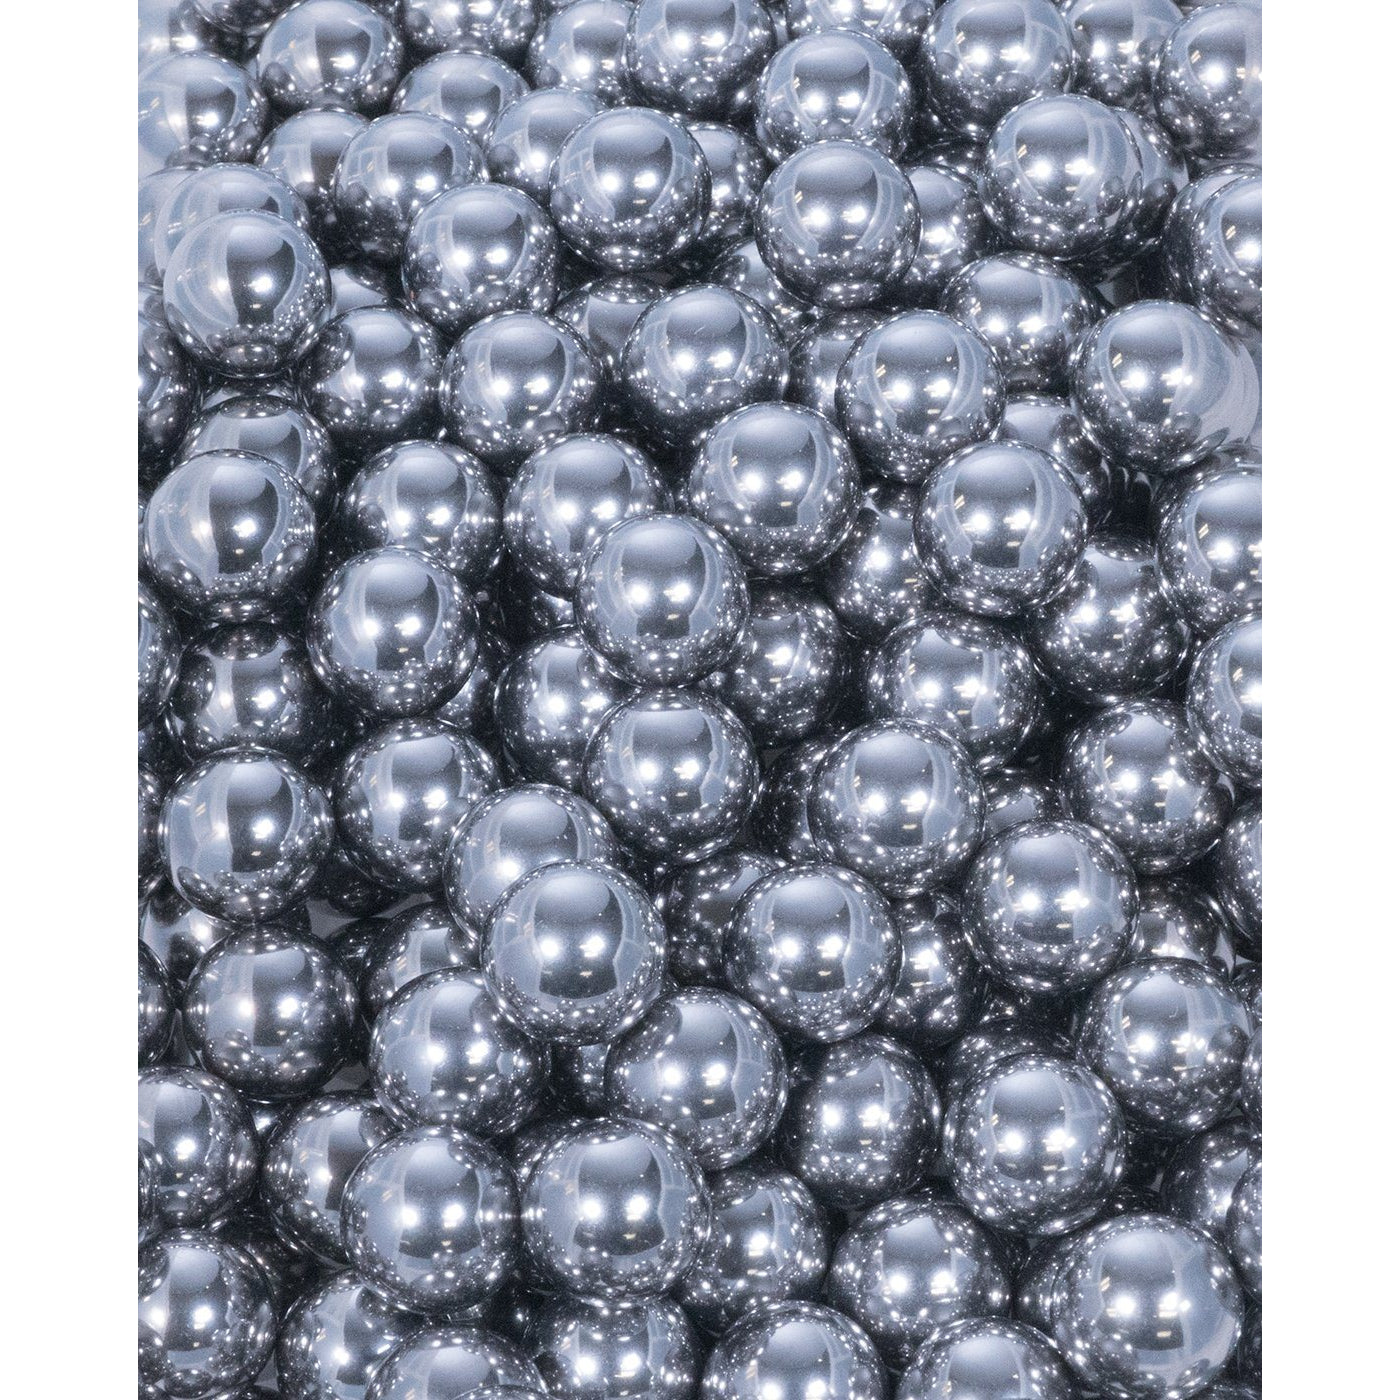 304 Stainless Steel Ball Bearings Packs 1/8-inch Diameter